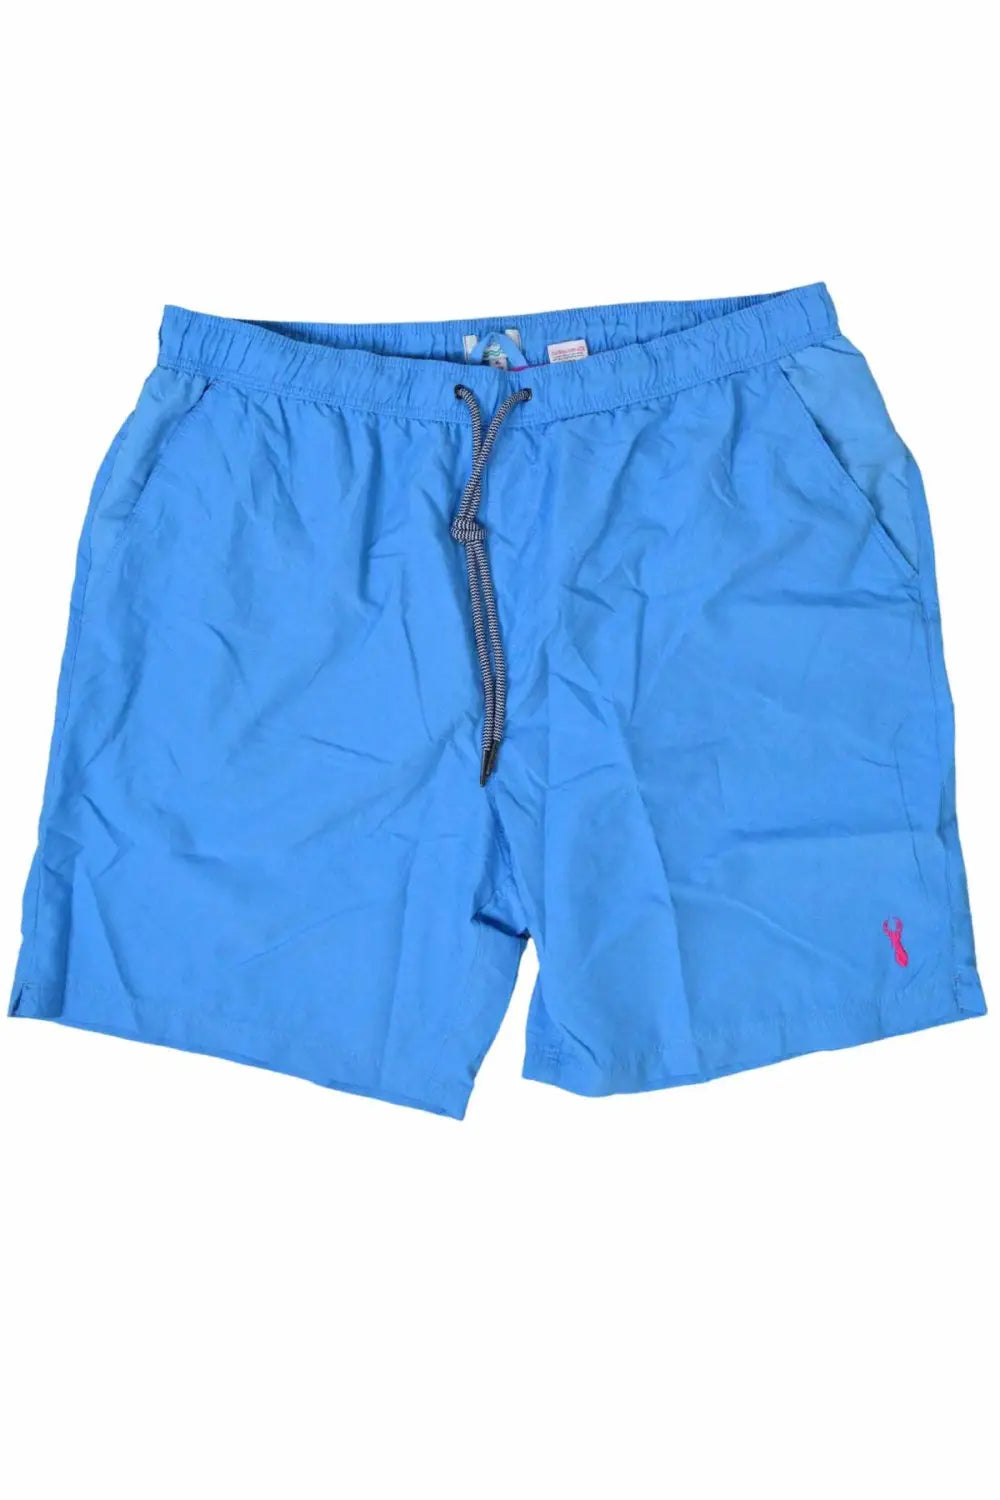 Secret Label Swim Shorts